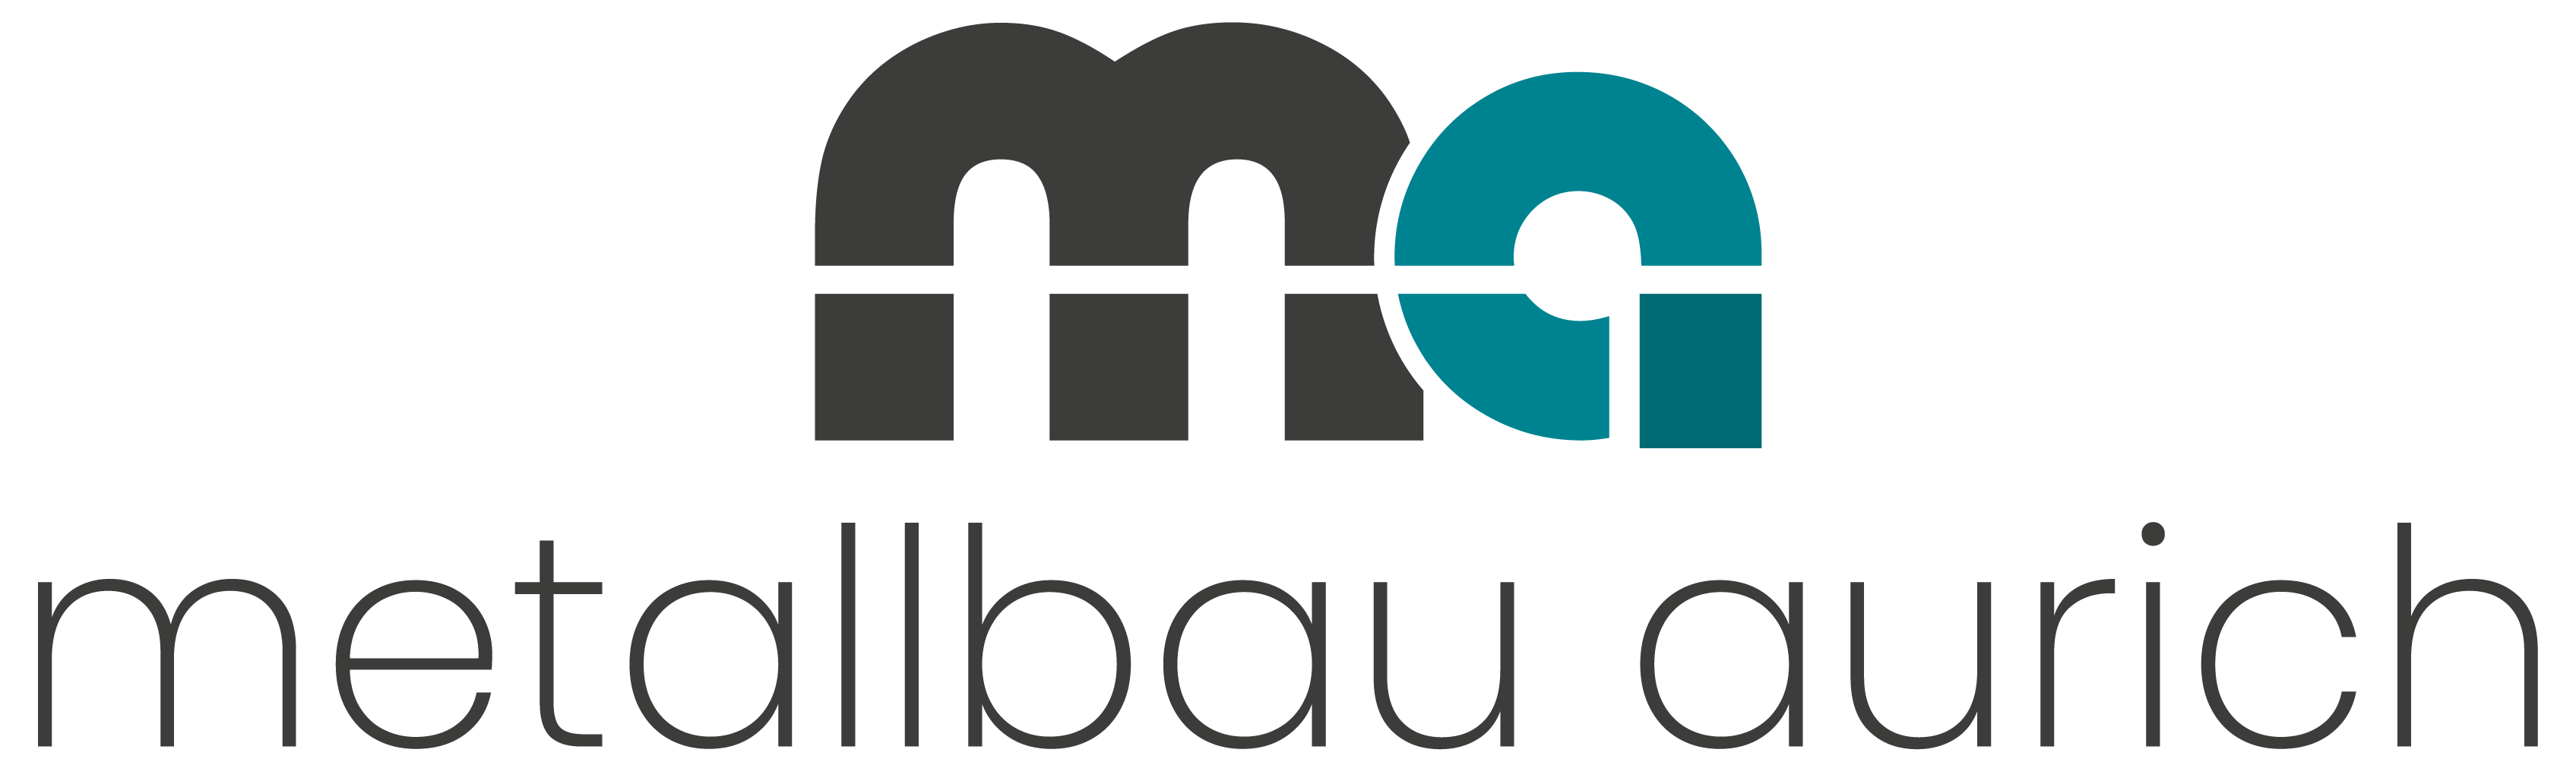 Logo metallbauaurich